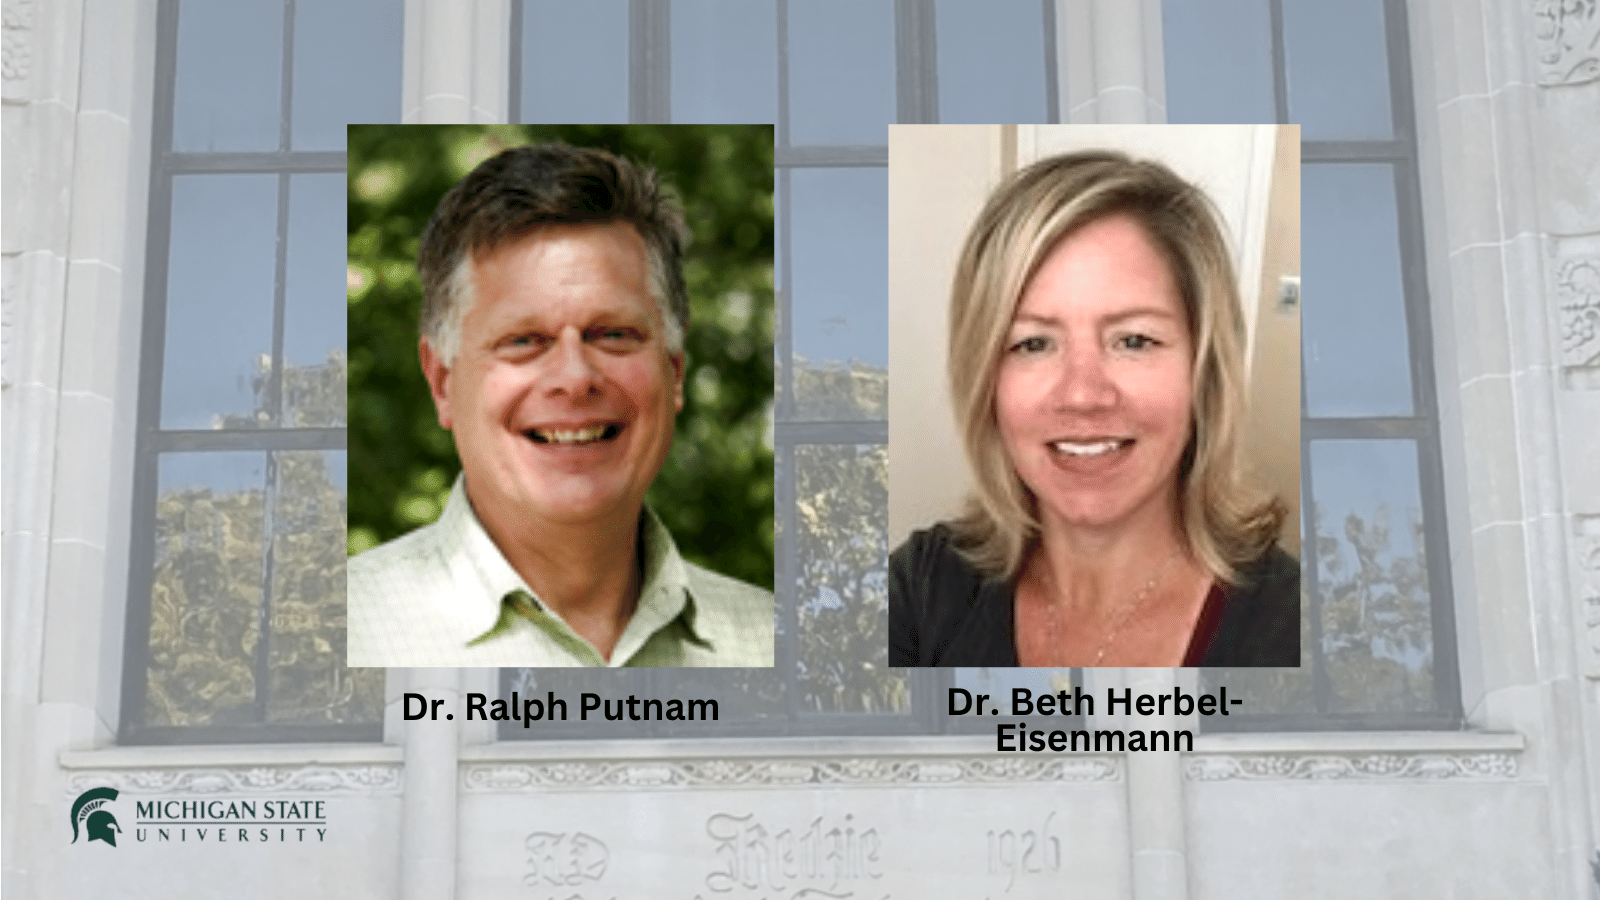 Photos of Ralph Putnam and Beth Herbel-Eisenmann